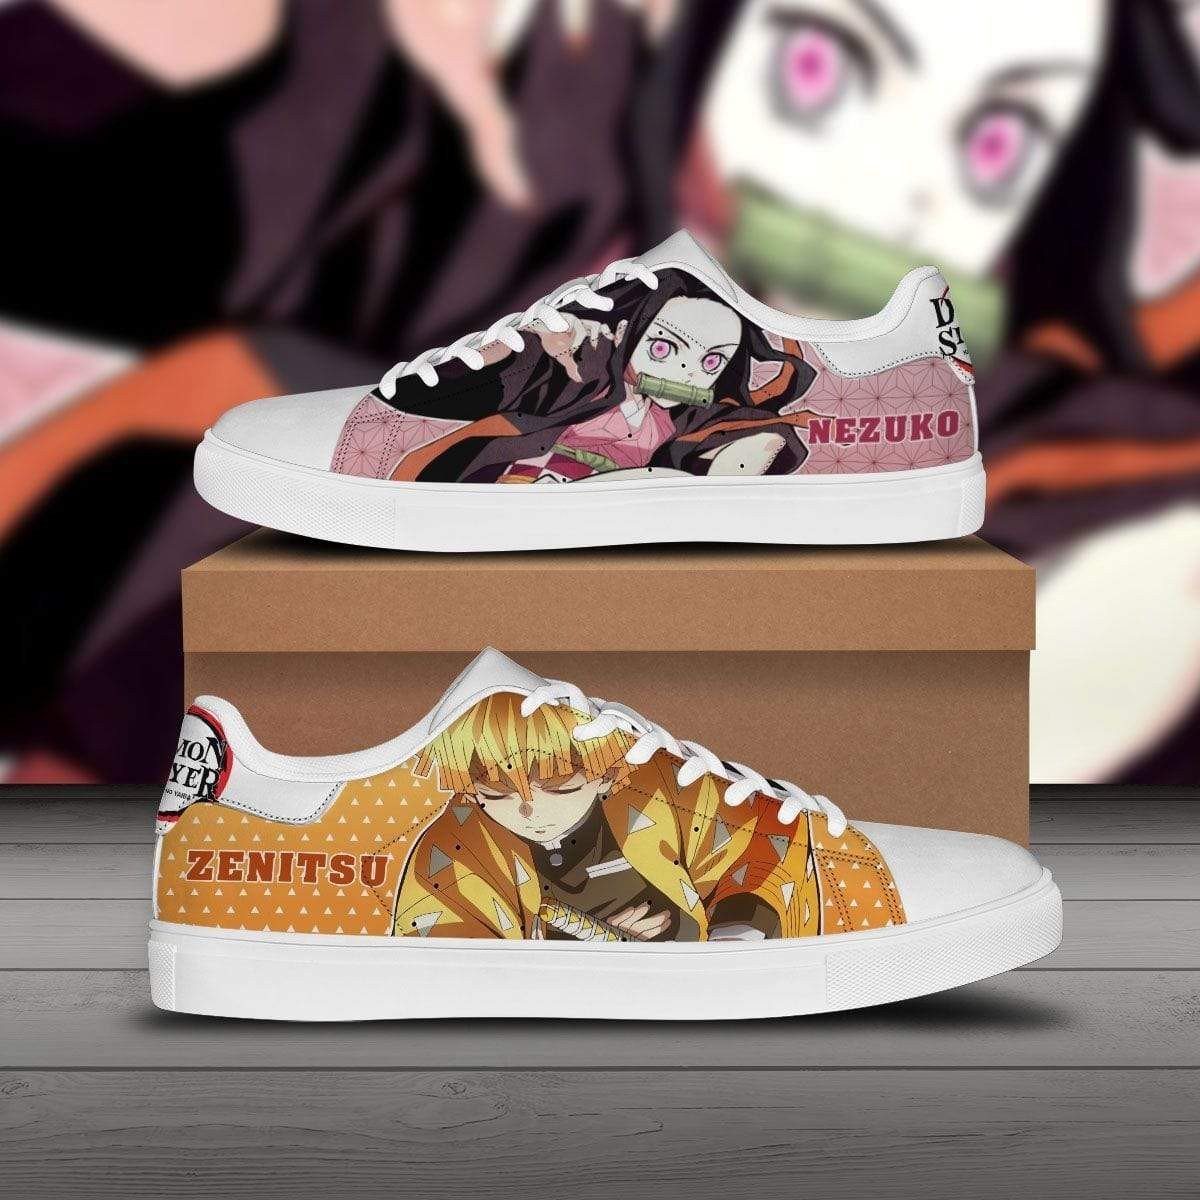 zenitsu and nezuko skate sneakers custom demon slayer anime shoes